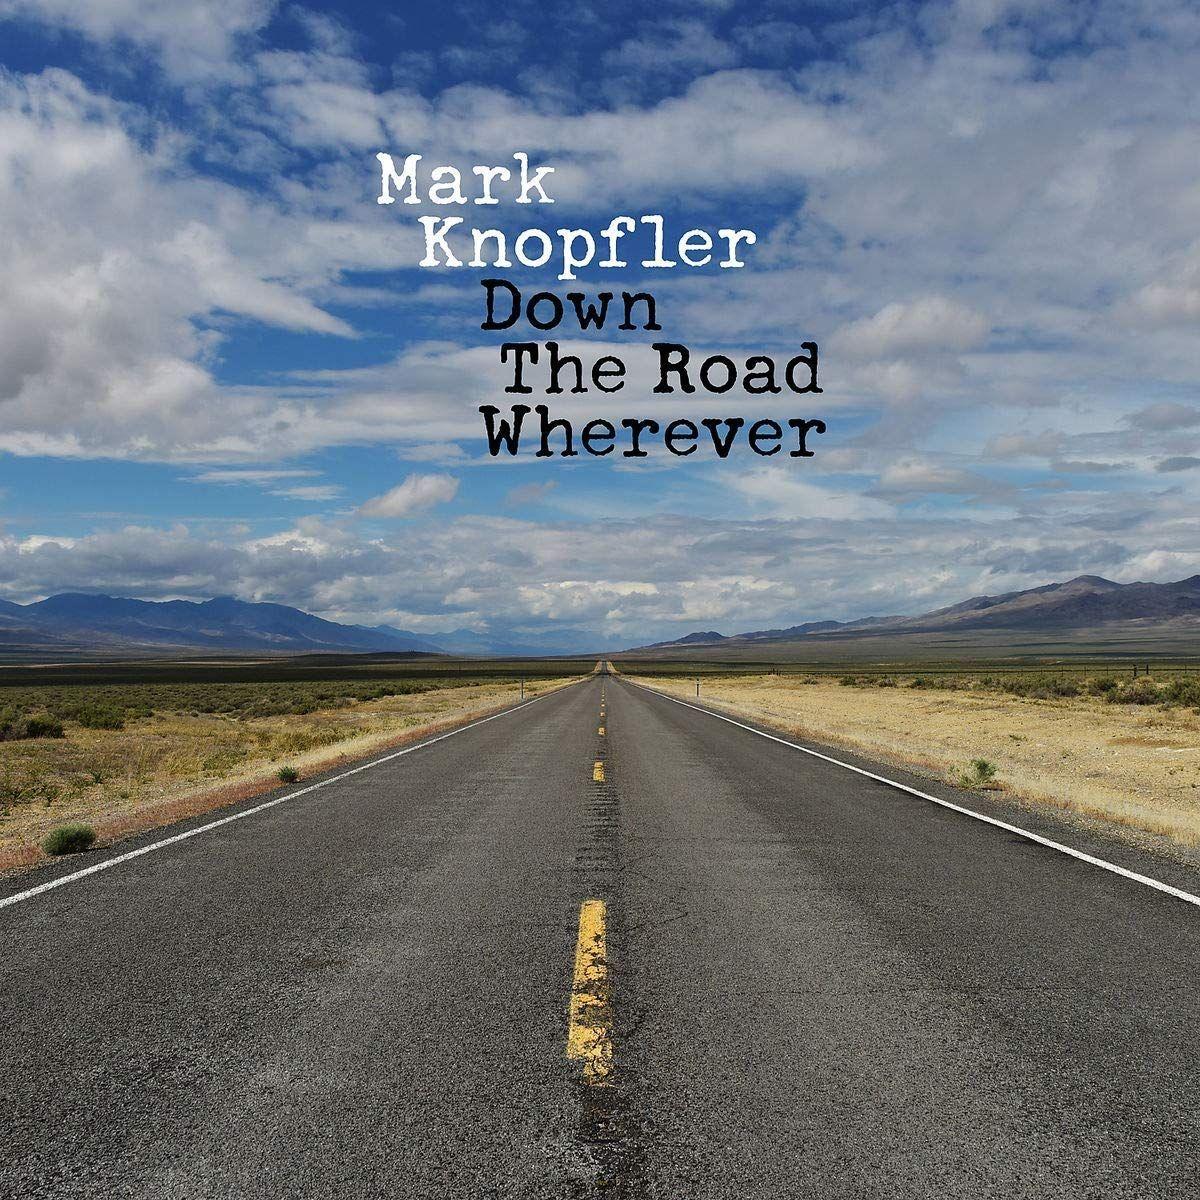 Cover des Albums "Down the Road Wherever" von Mark Knopfler